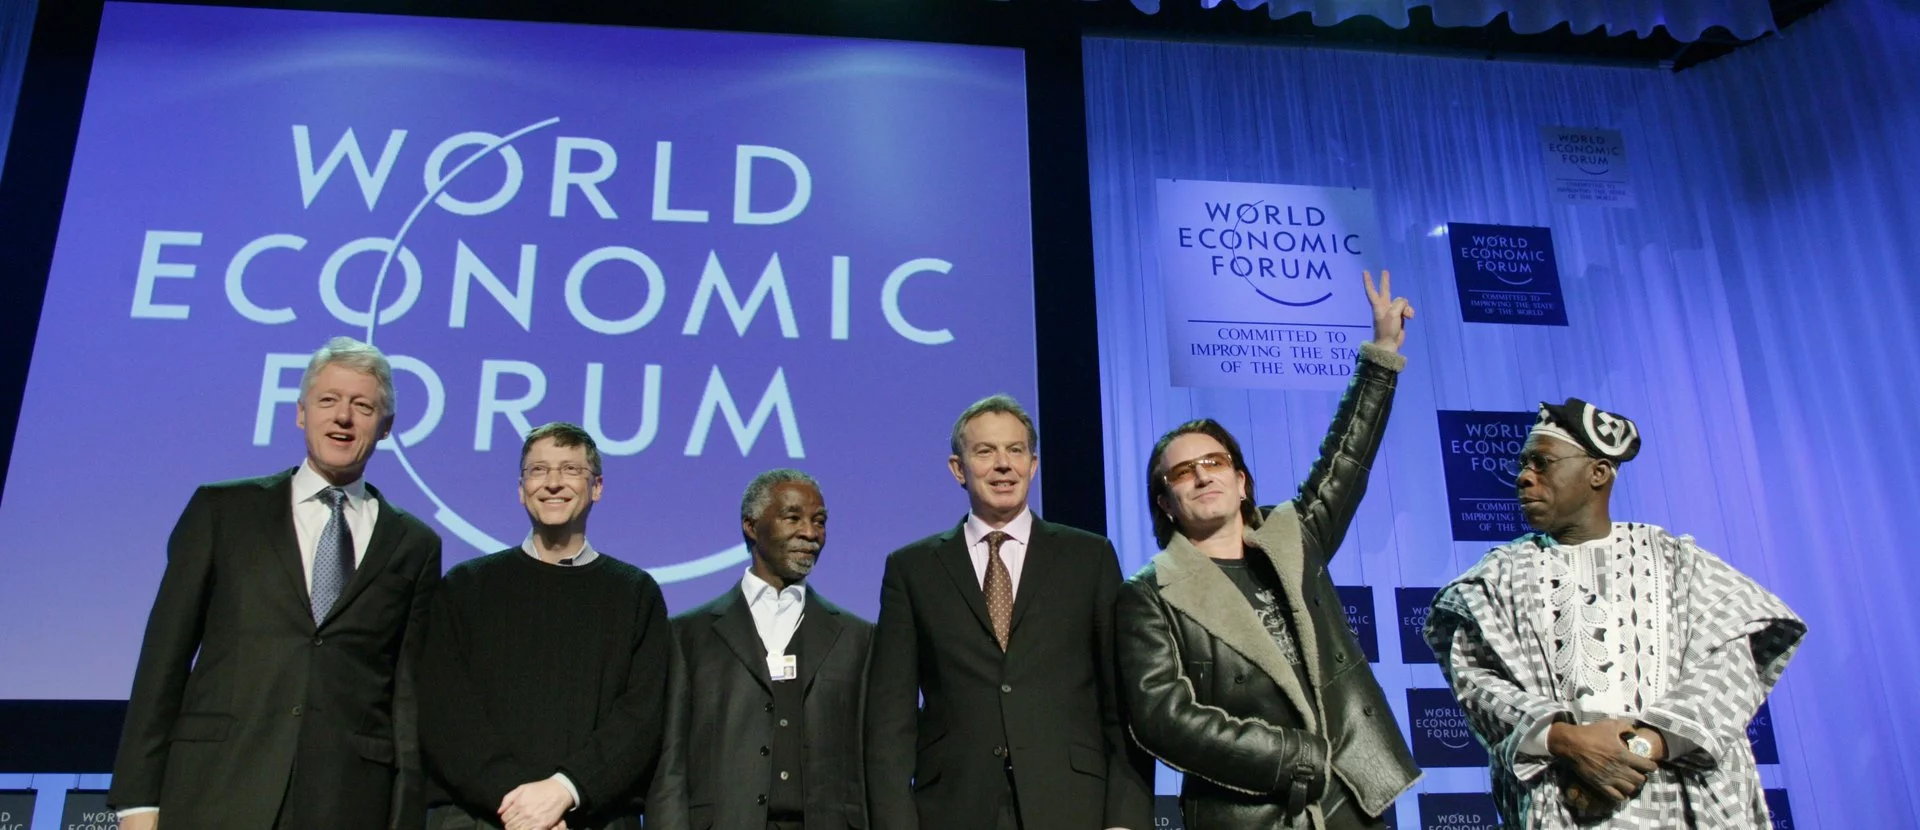 19-facts-about-world-economic-forum